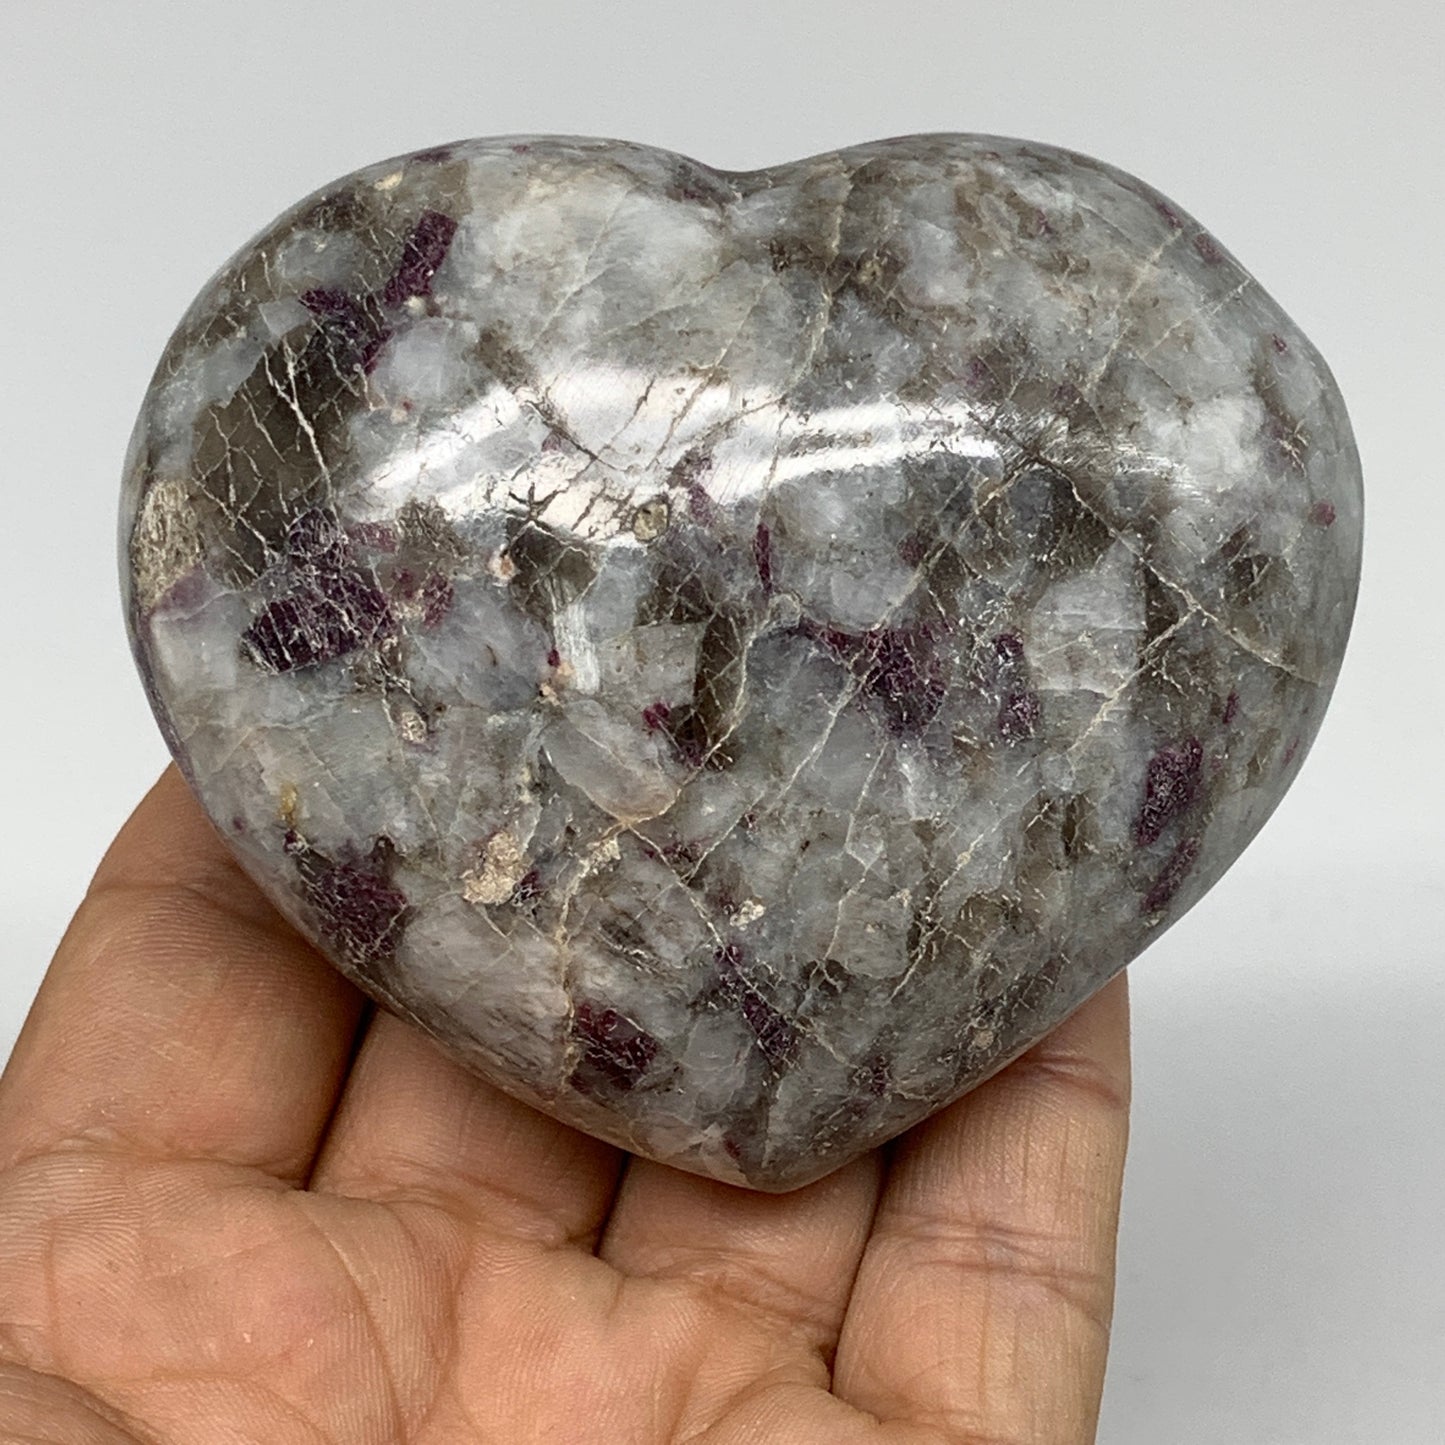 273.2g, 2.7"x3.1"x1.5" Rubellite Heart Polished Healing Crystal Gemstone, B3672